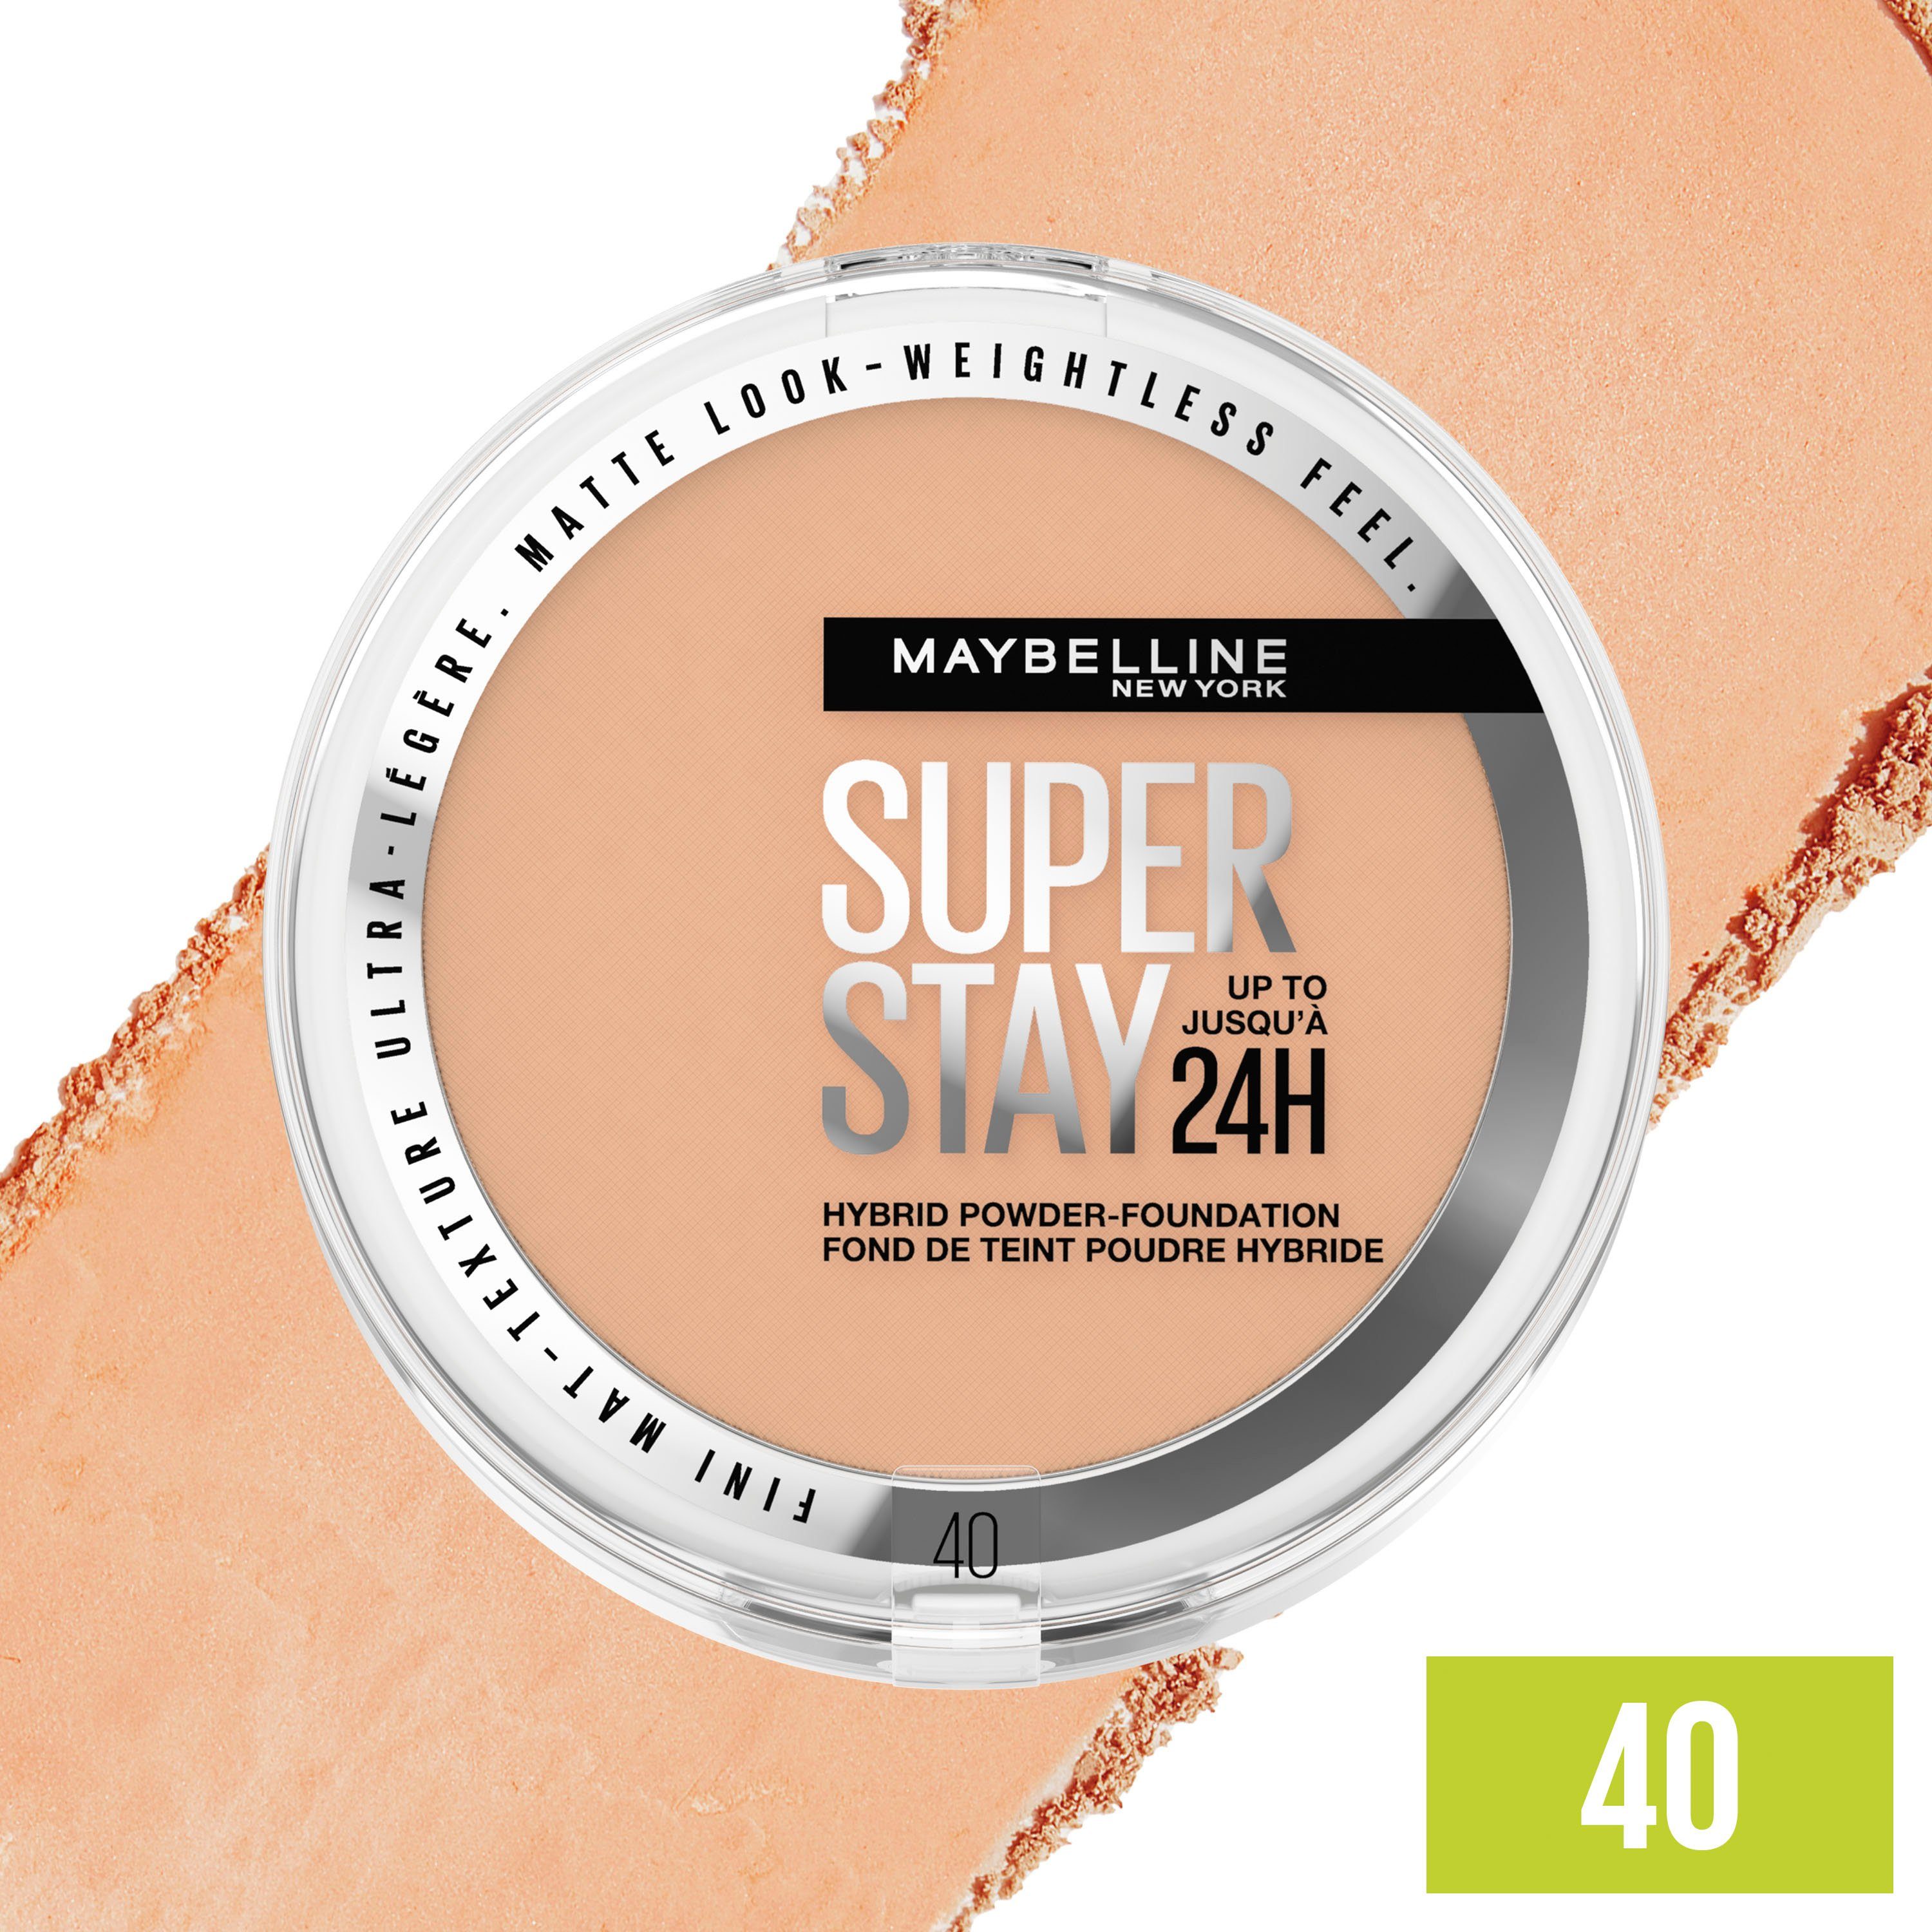 Maybelline Hybrides YORK NEW Stay Puder York Foundation Make-Up New Super MAYBELLINE